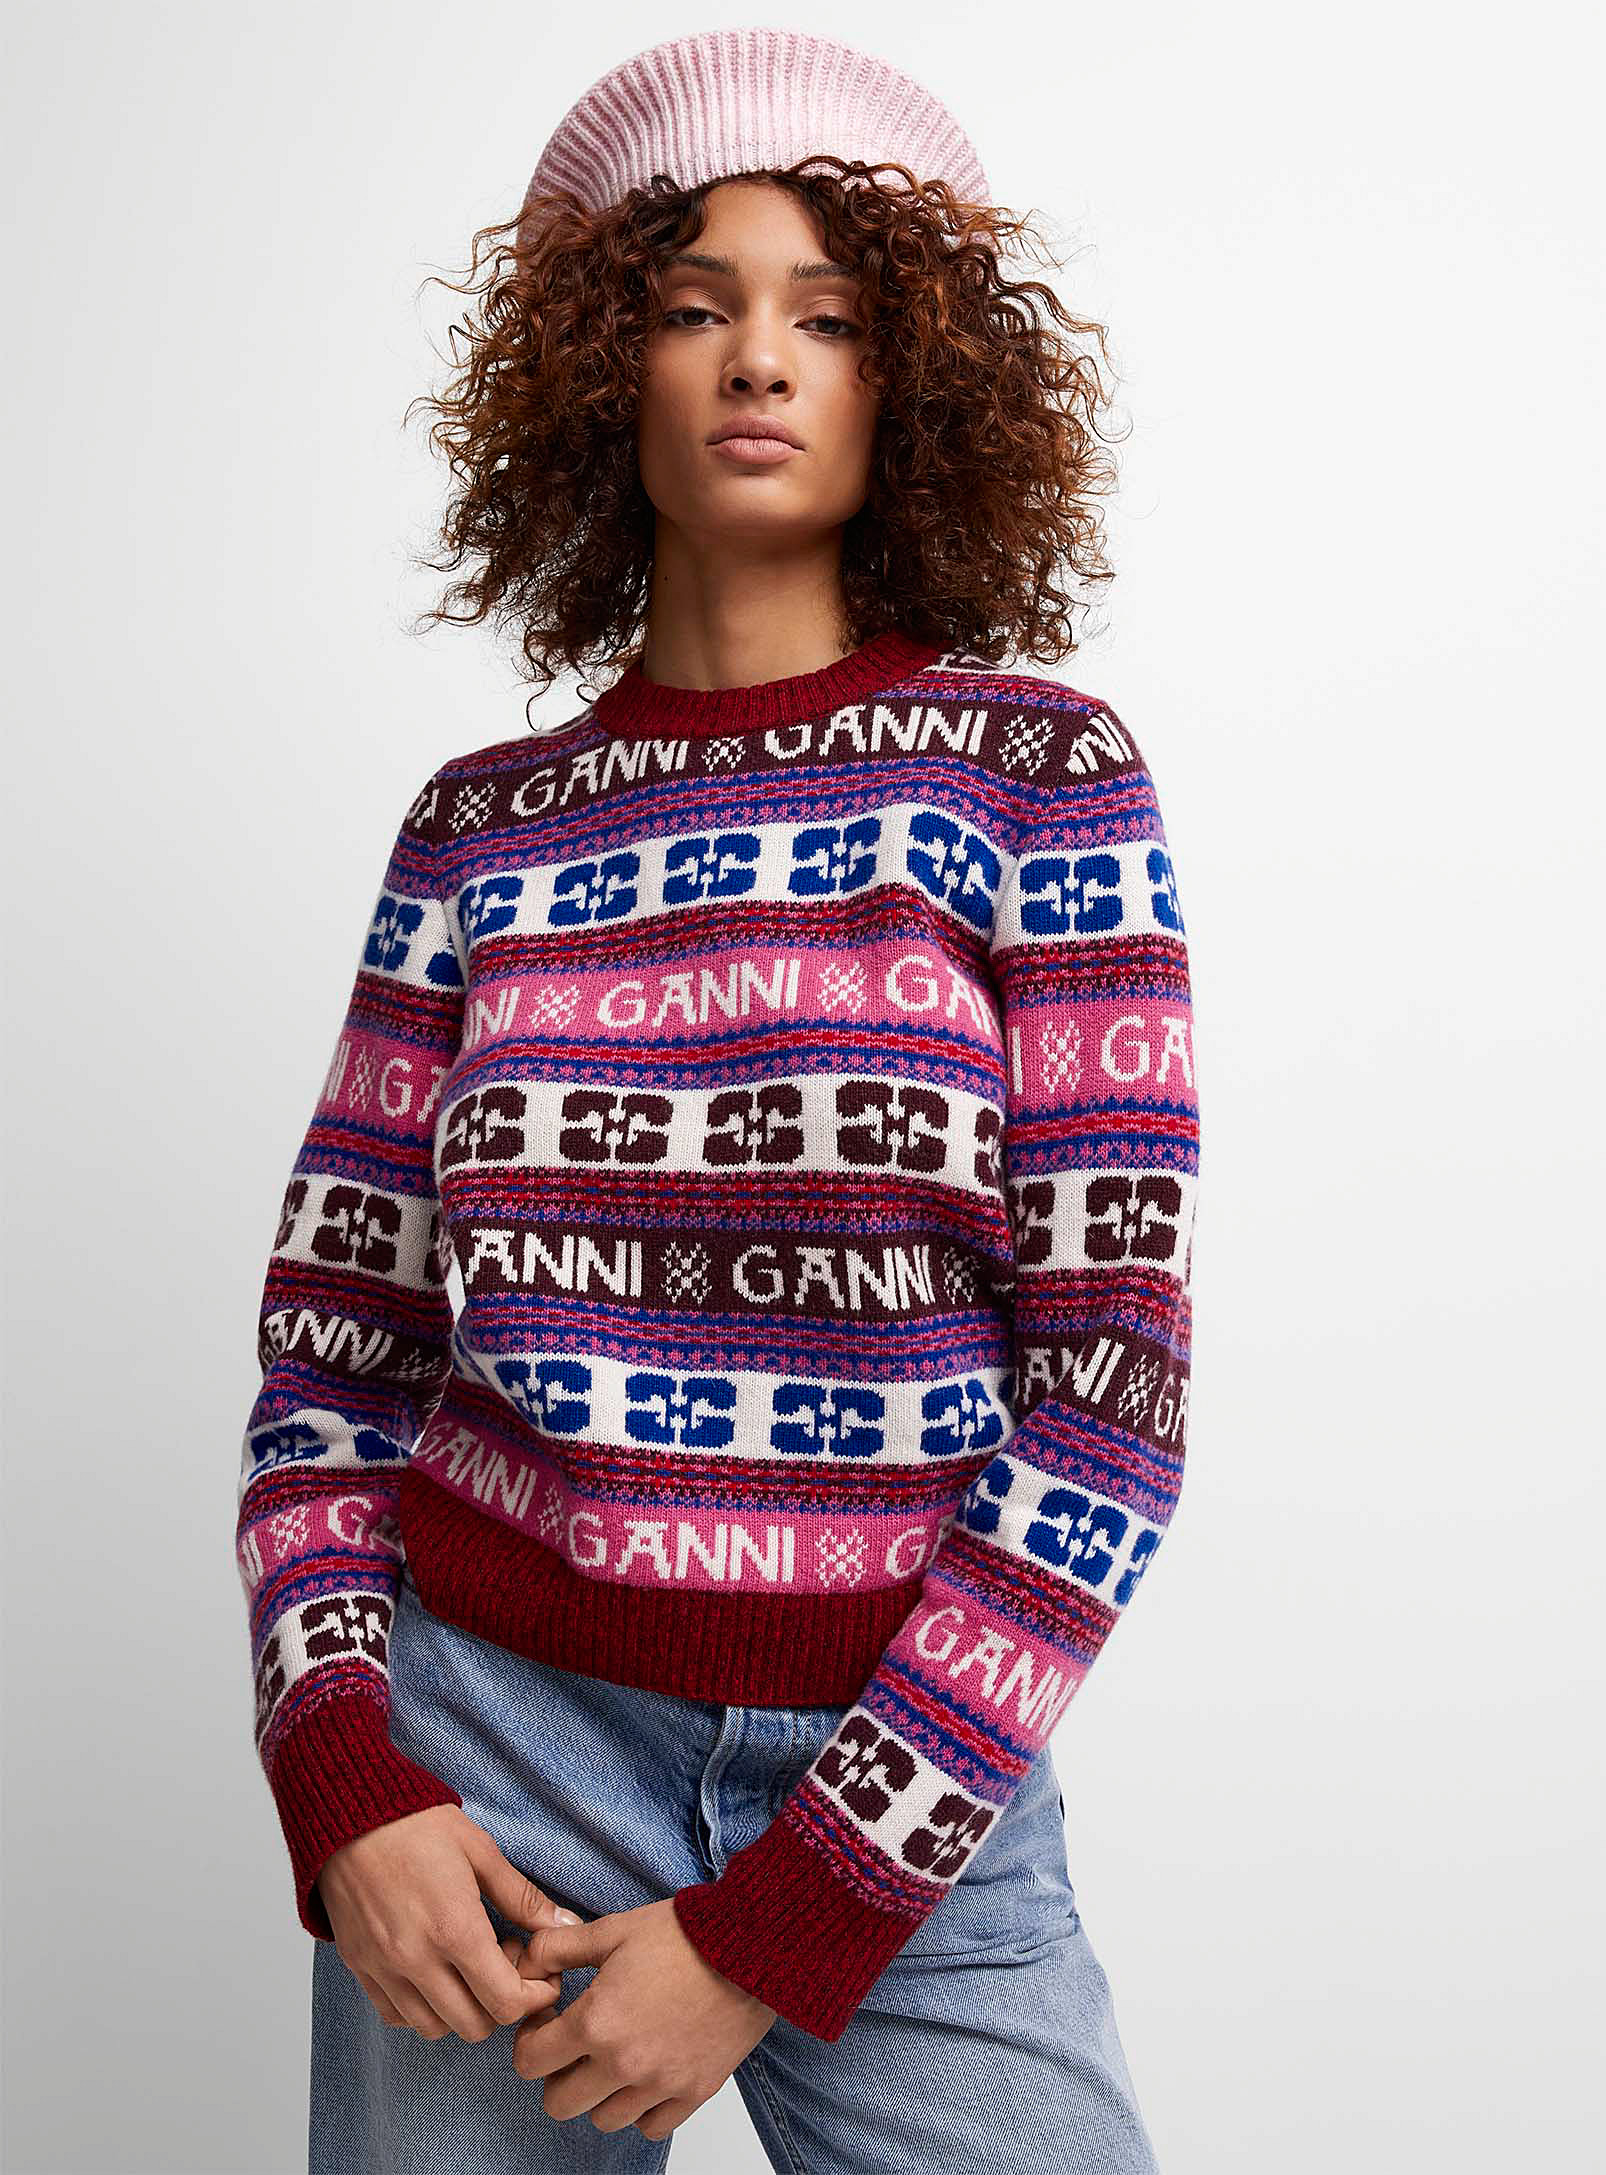 Ganni - Women's Signature jacquard sweater